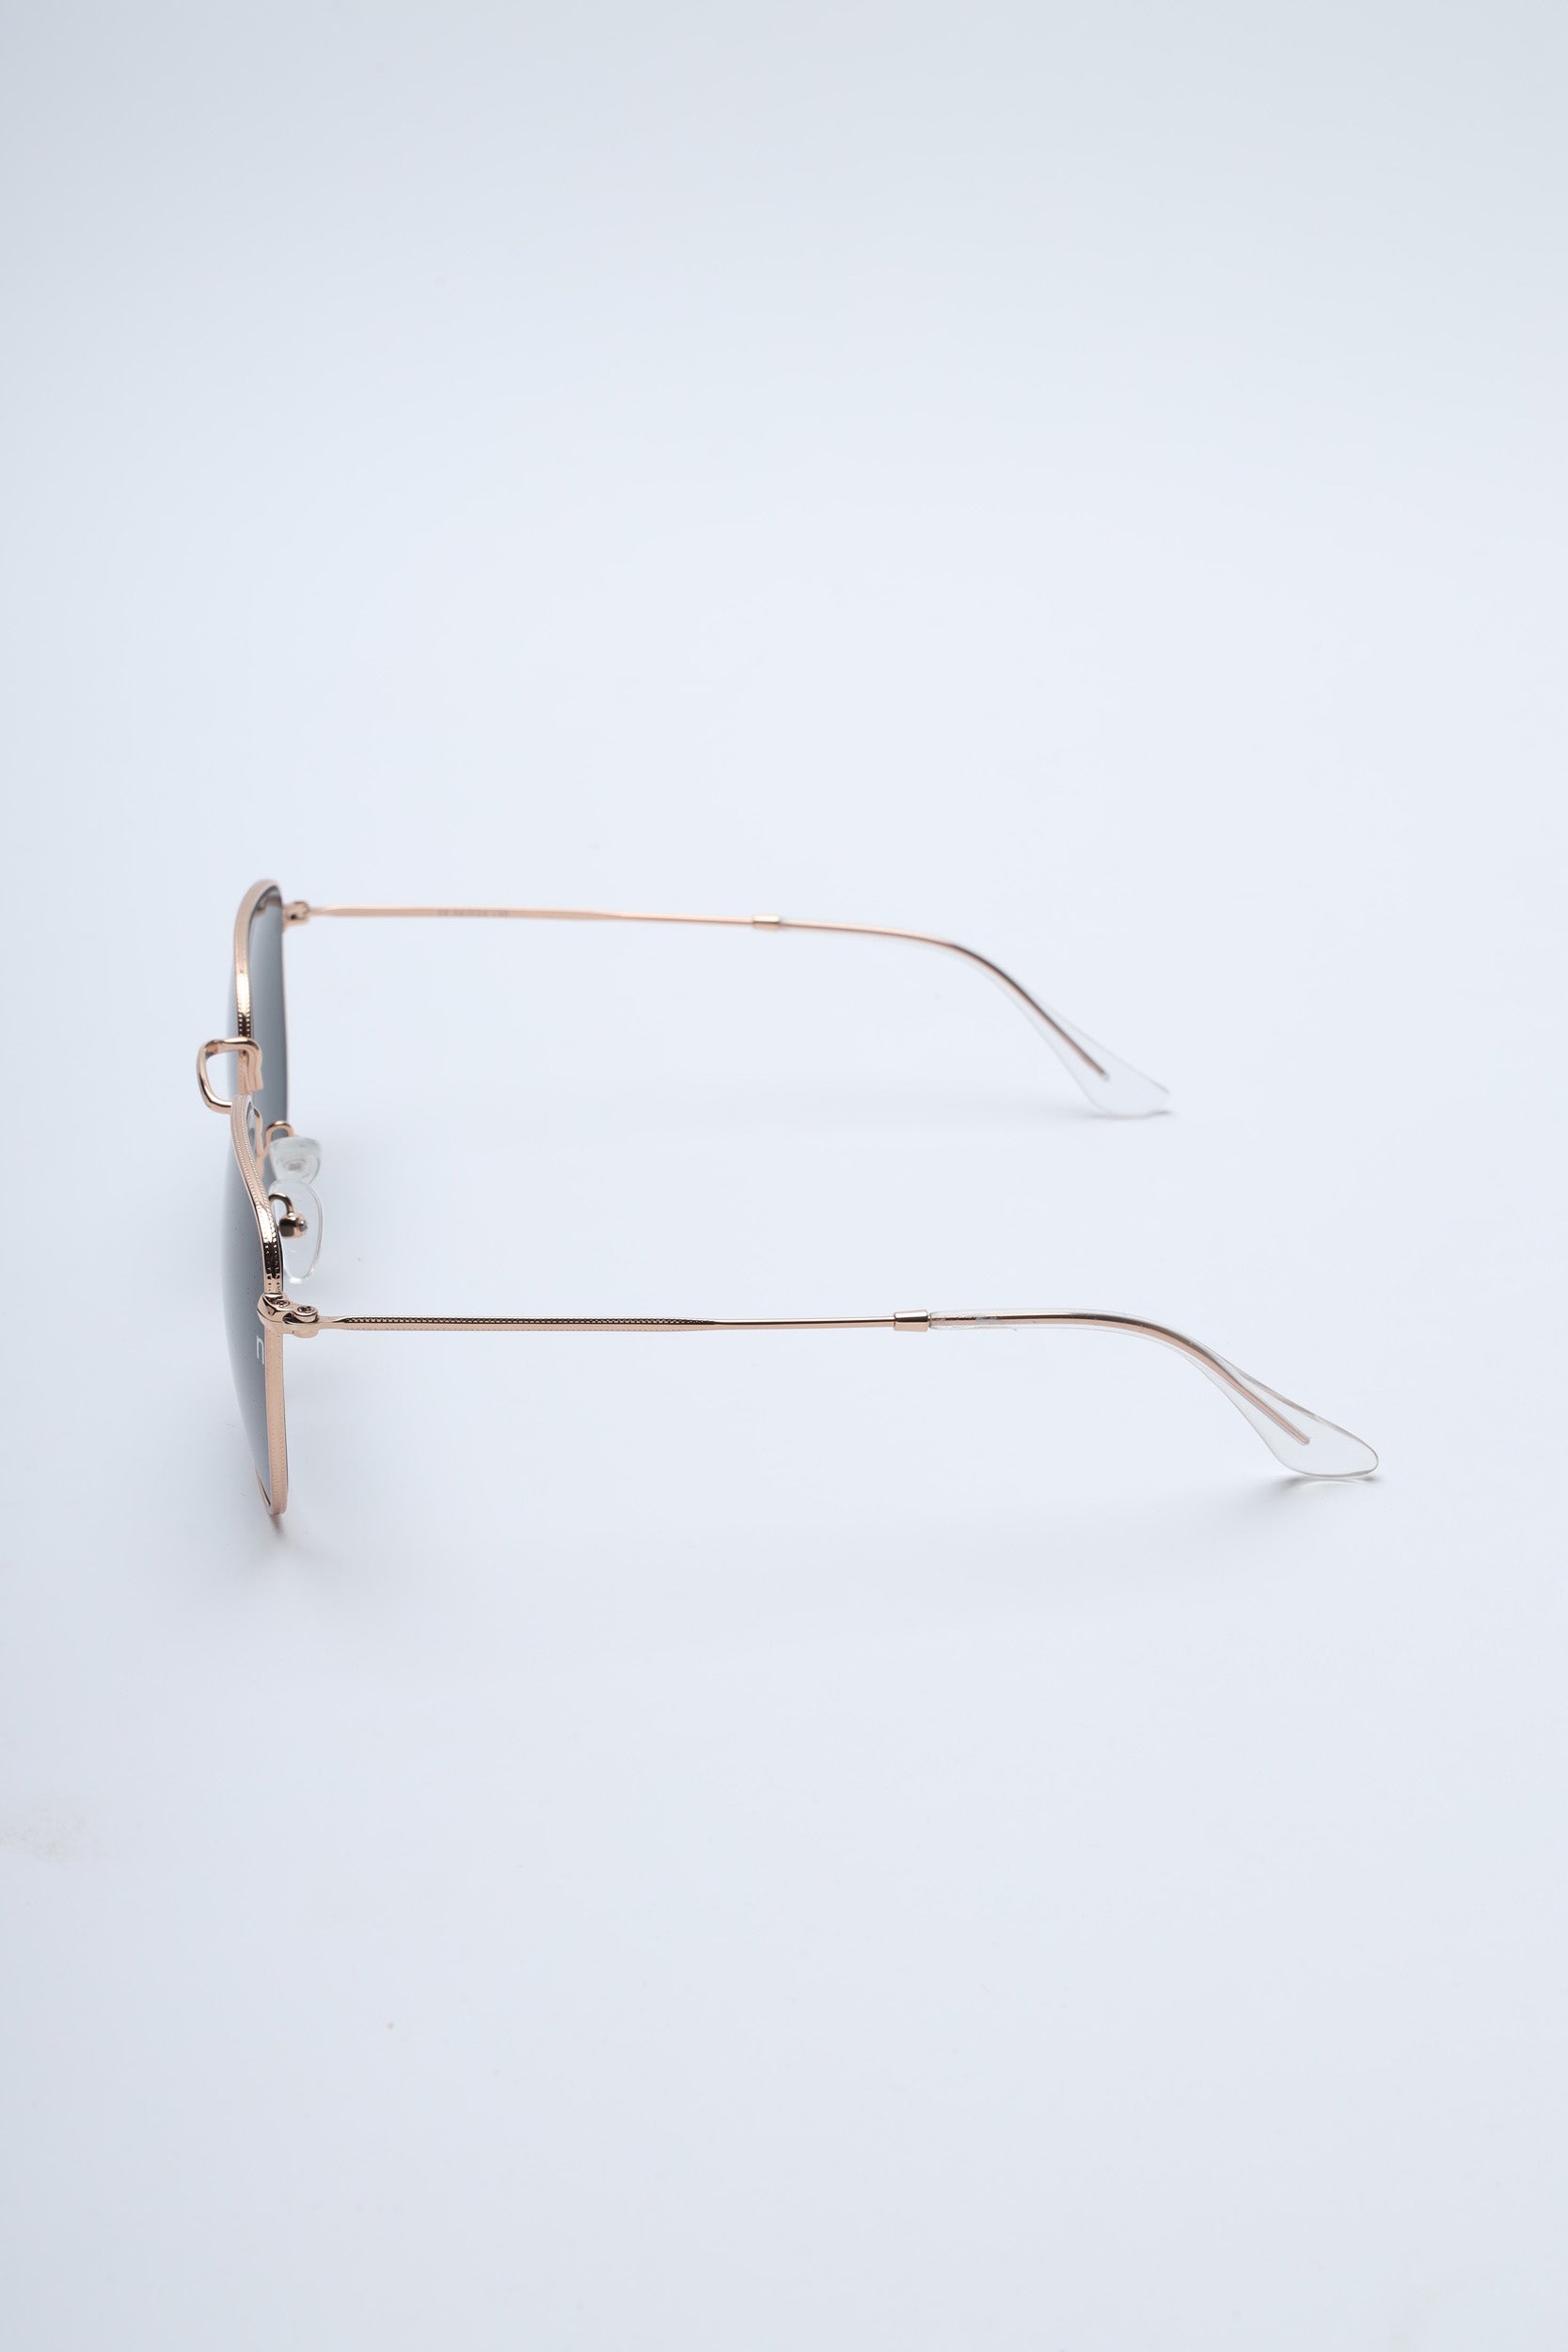 Versace Matte Black/Gold Eyeglasses | Glasses.com® | Free Shipping